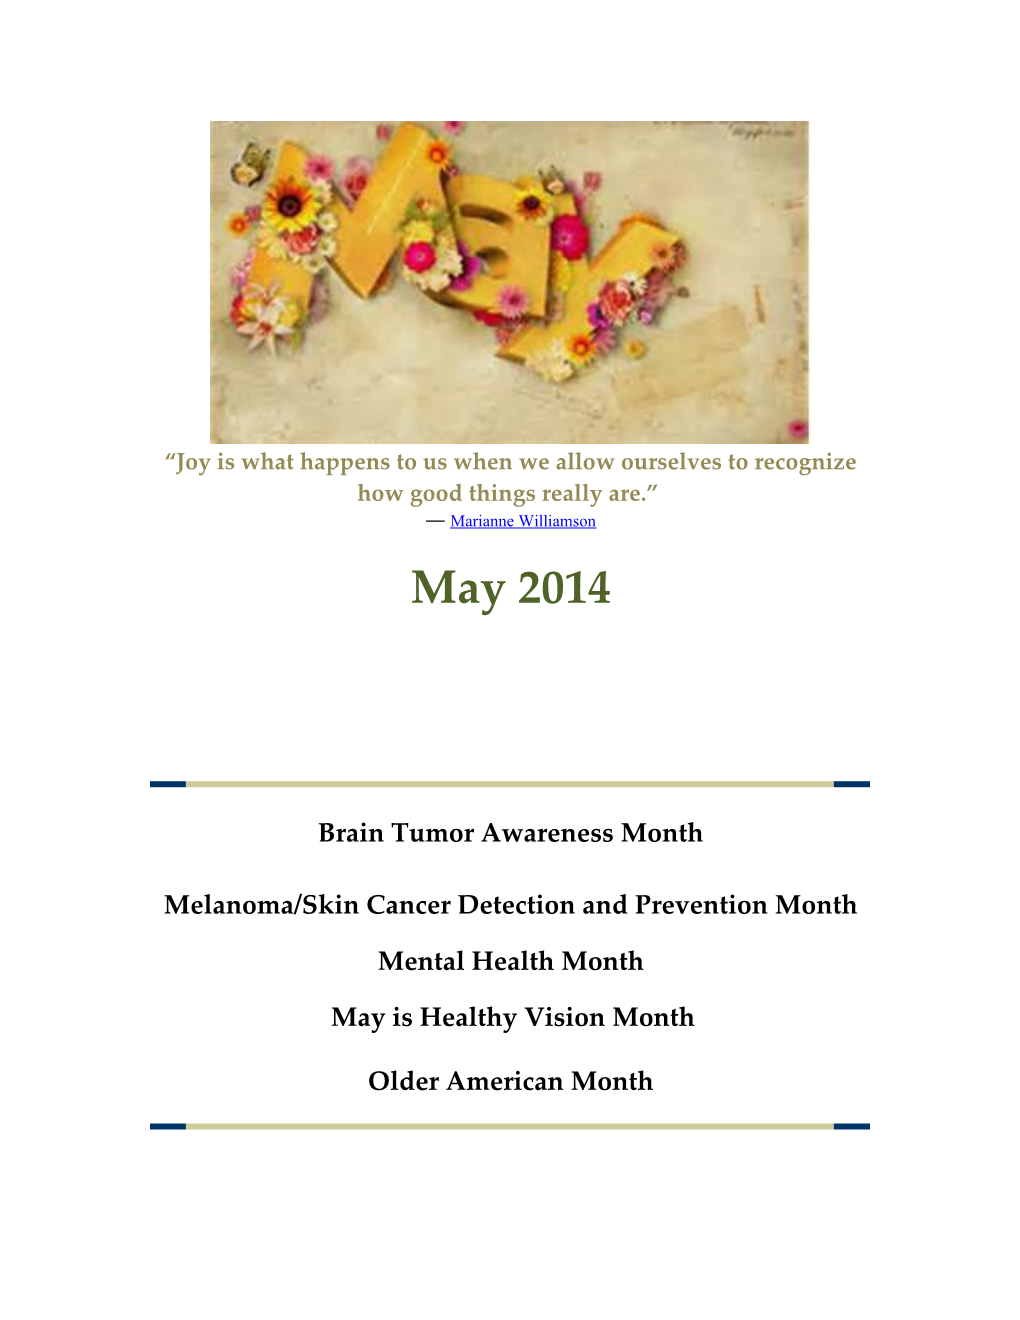 Melanoma/Skin Cancer Detection and Prevention Month